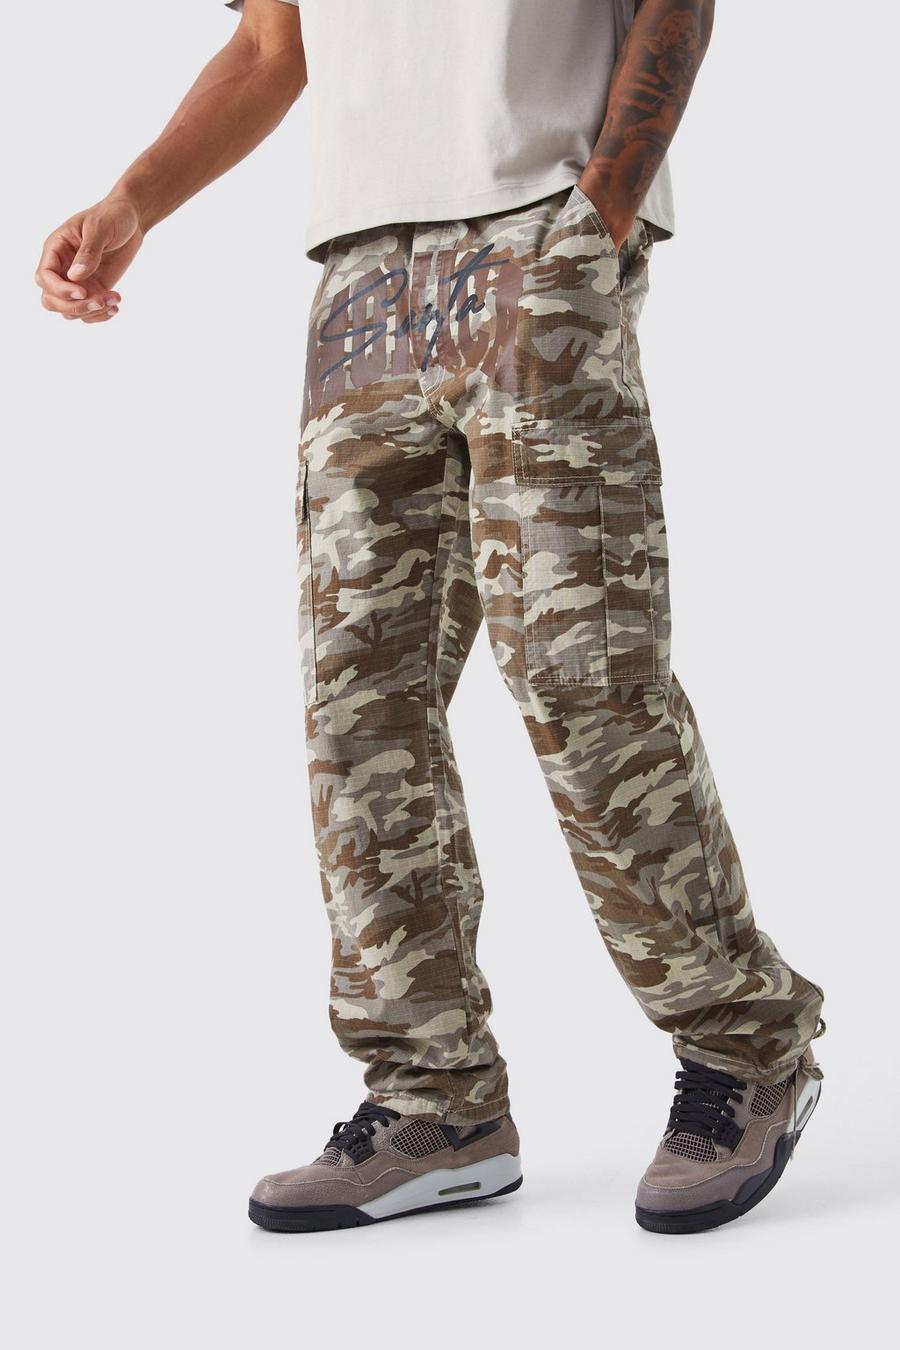 Pantaloni Cargo Tall rilassati stile Varsity con stampa di slogan in fantasia militare, Khaki